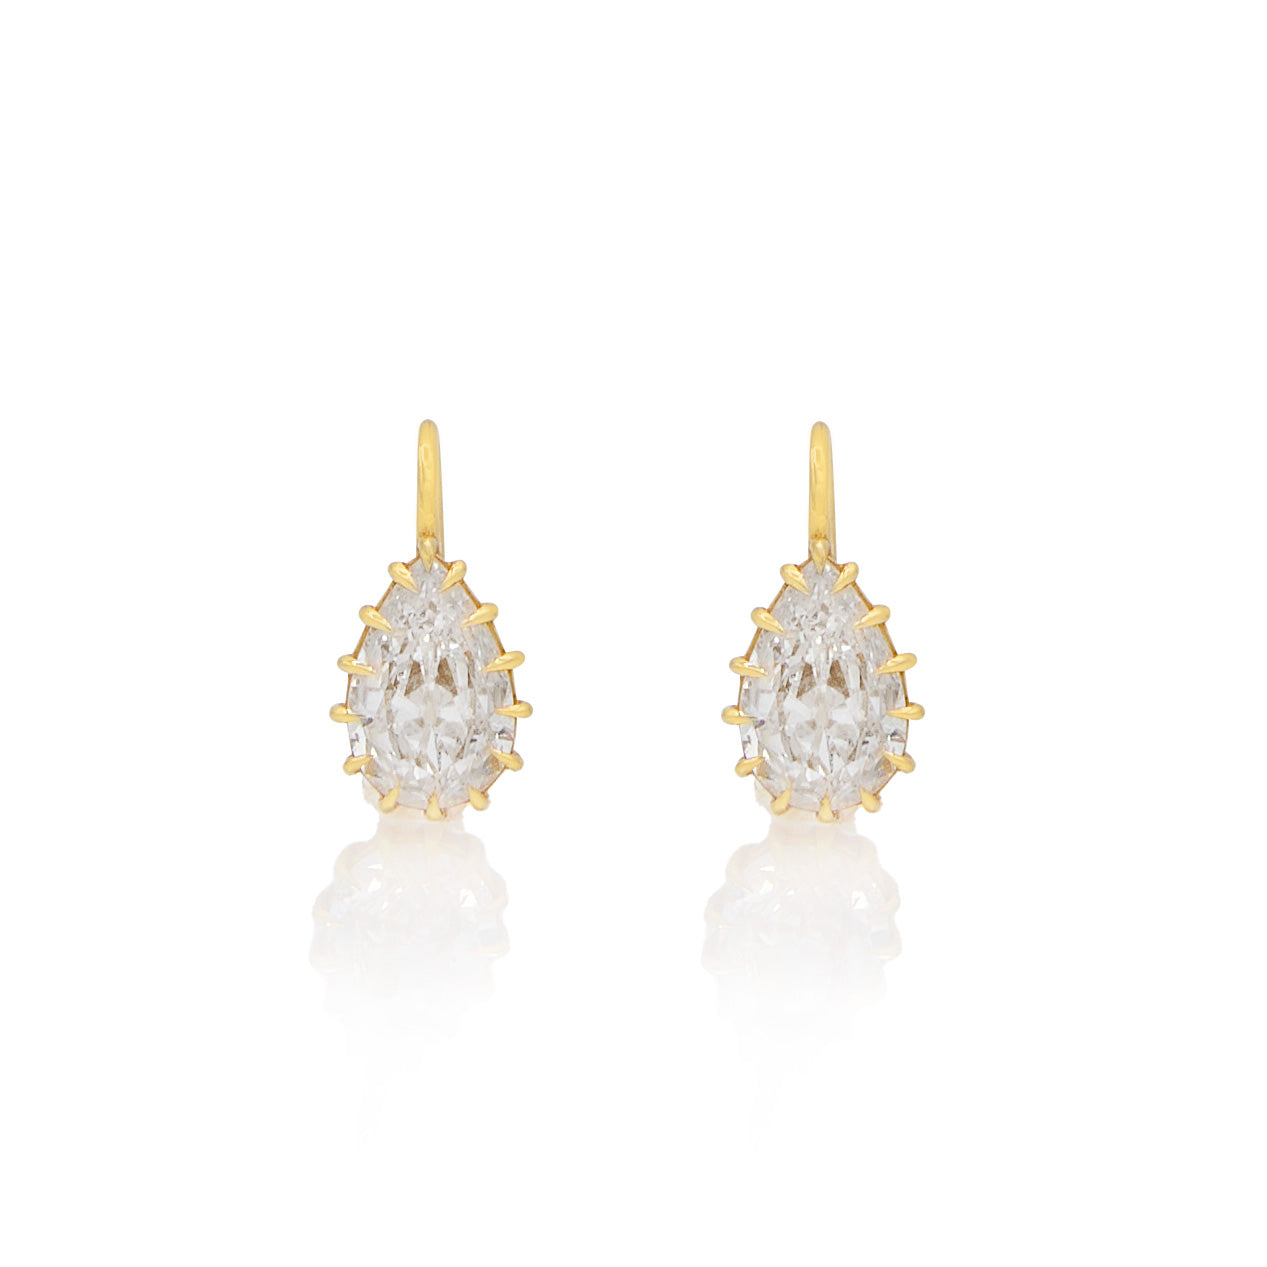 Jenna Blake Pear Shape Diamond Earrings